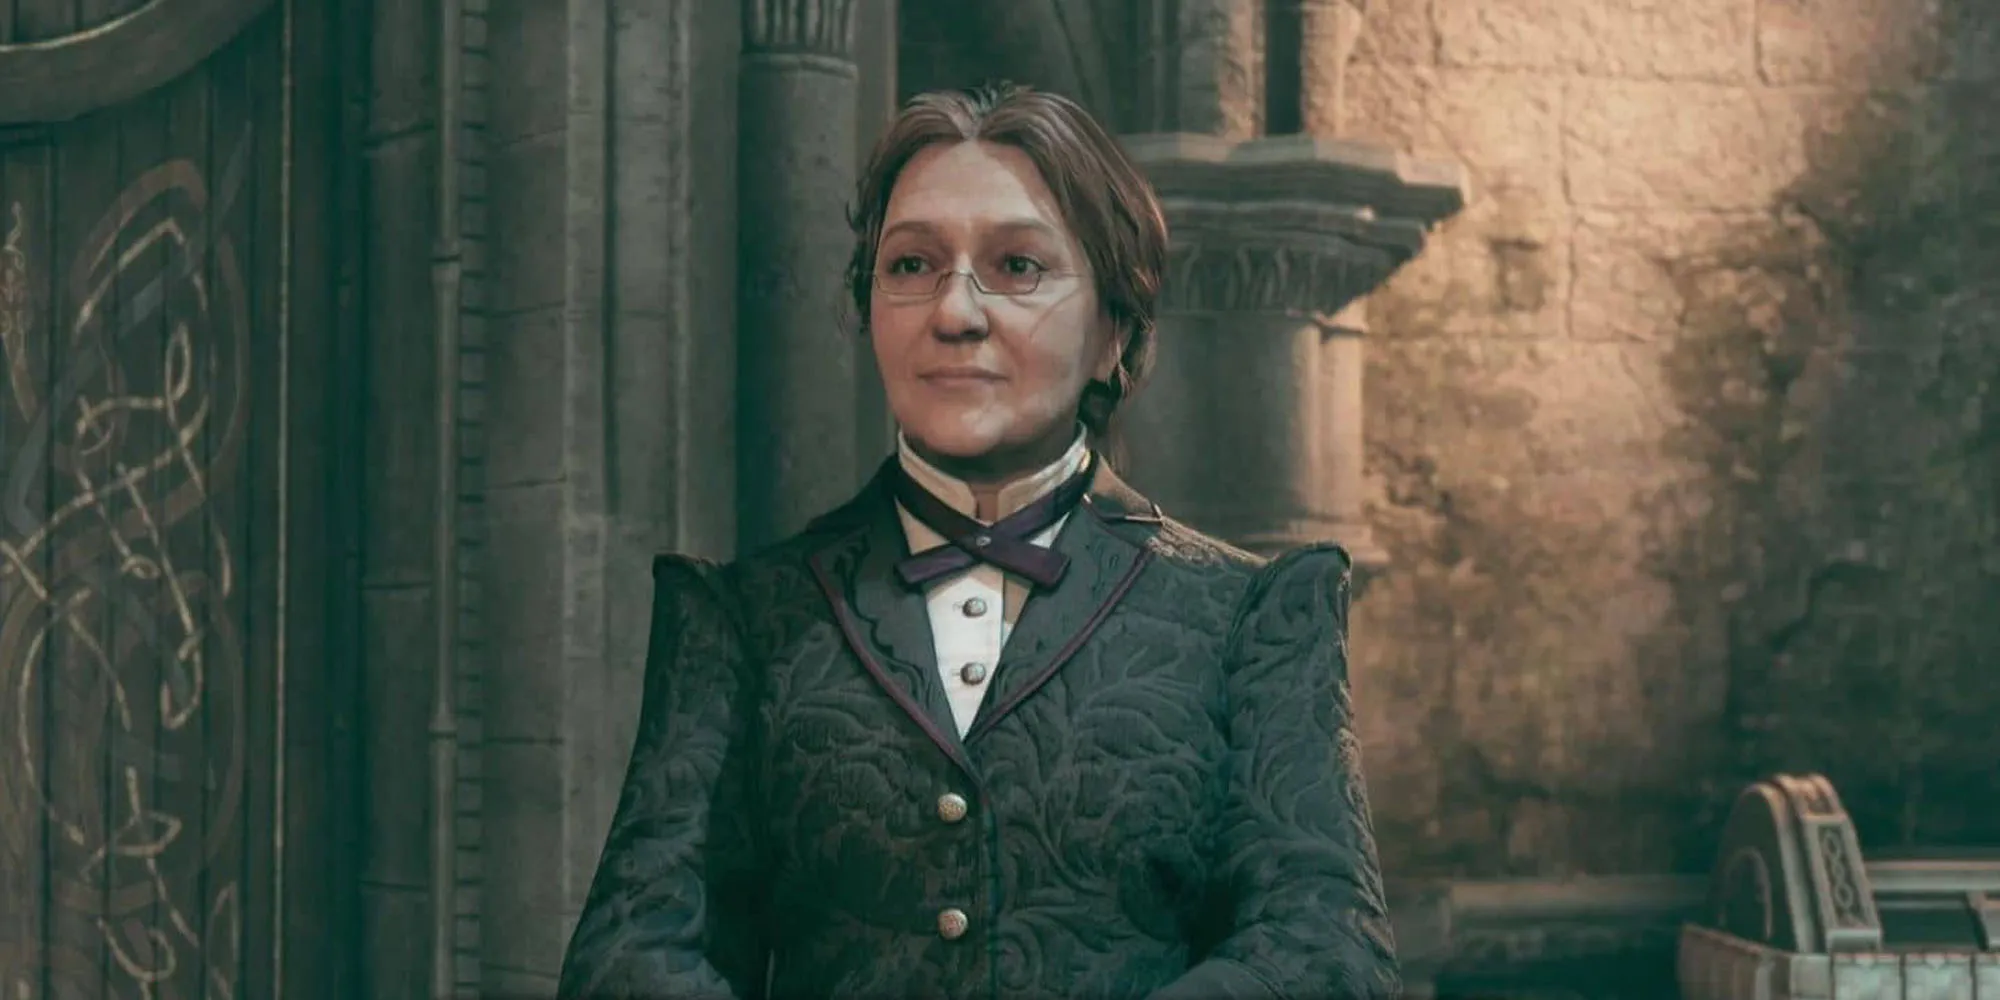 Professor Matilda Weasley